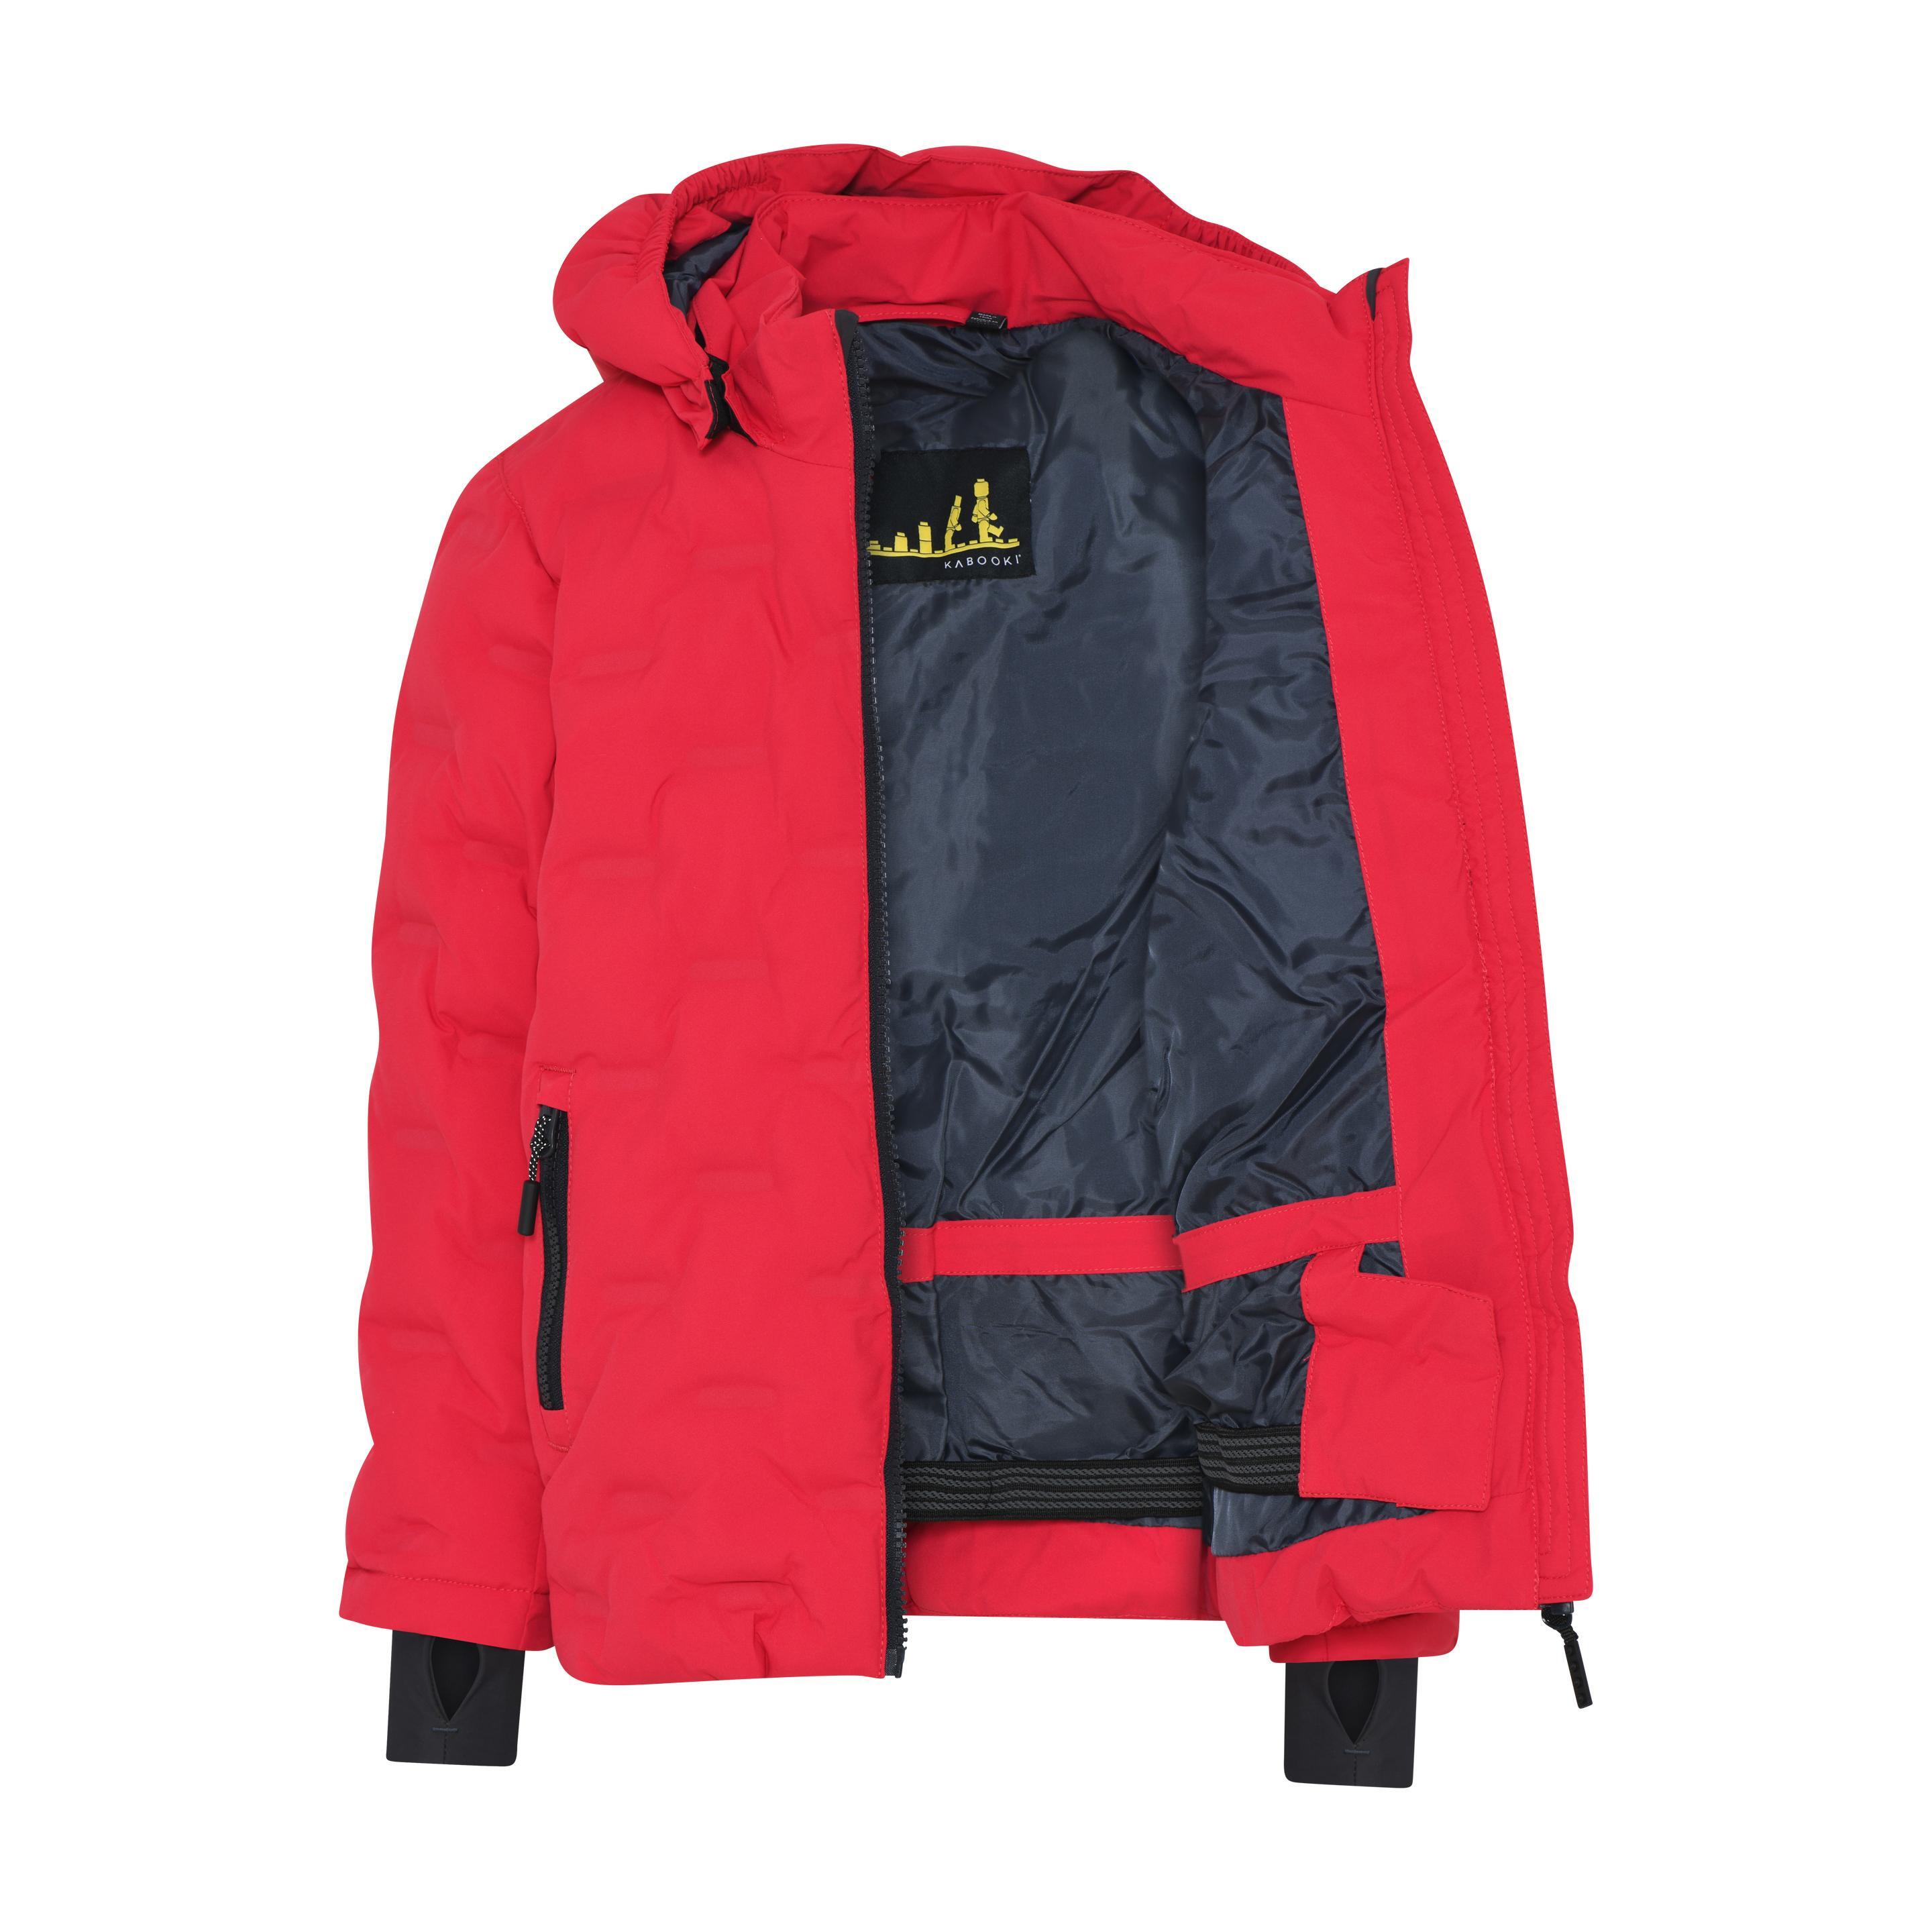 Legowear Jacket Lwjipe 706 Coral Red | NordBaby™